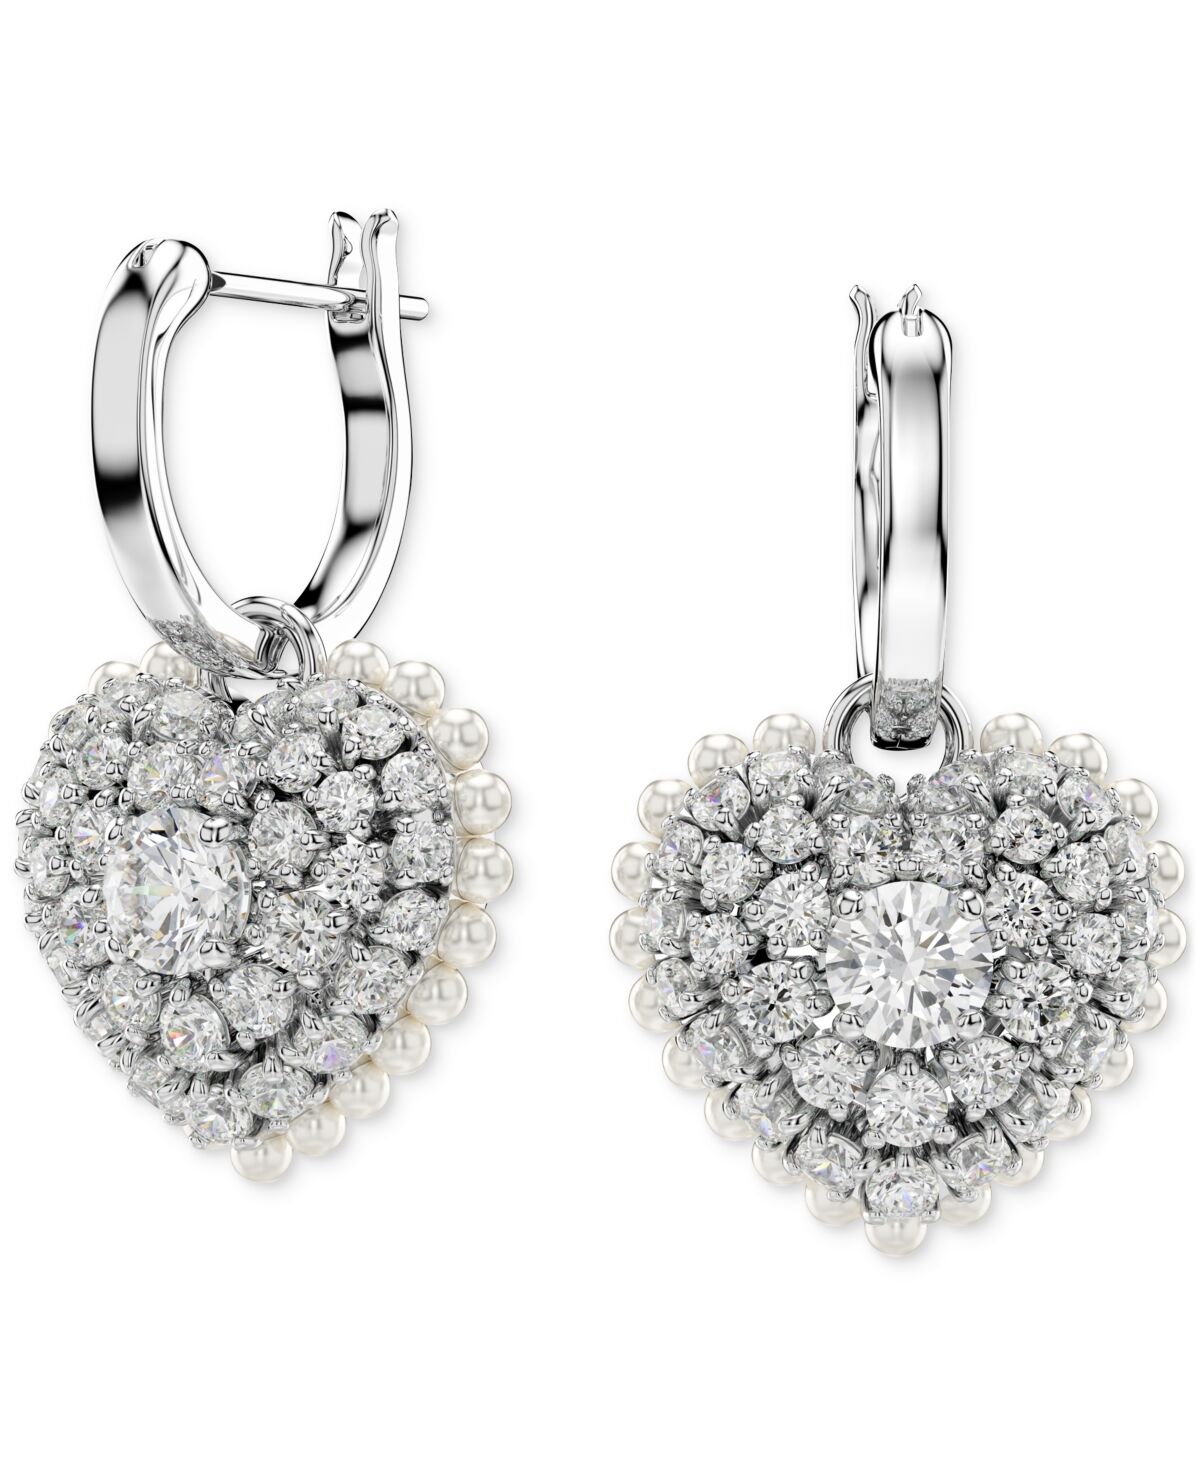 Swarovski Rhodium-Plated Crystal & Imitation Pearl Heart Charm Hoop Earrings - Silver